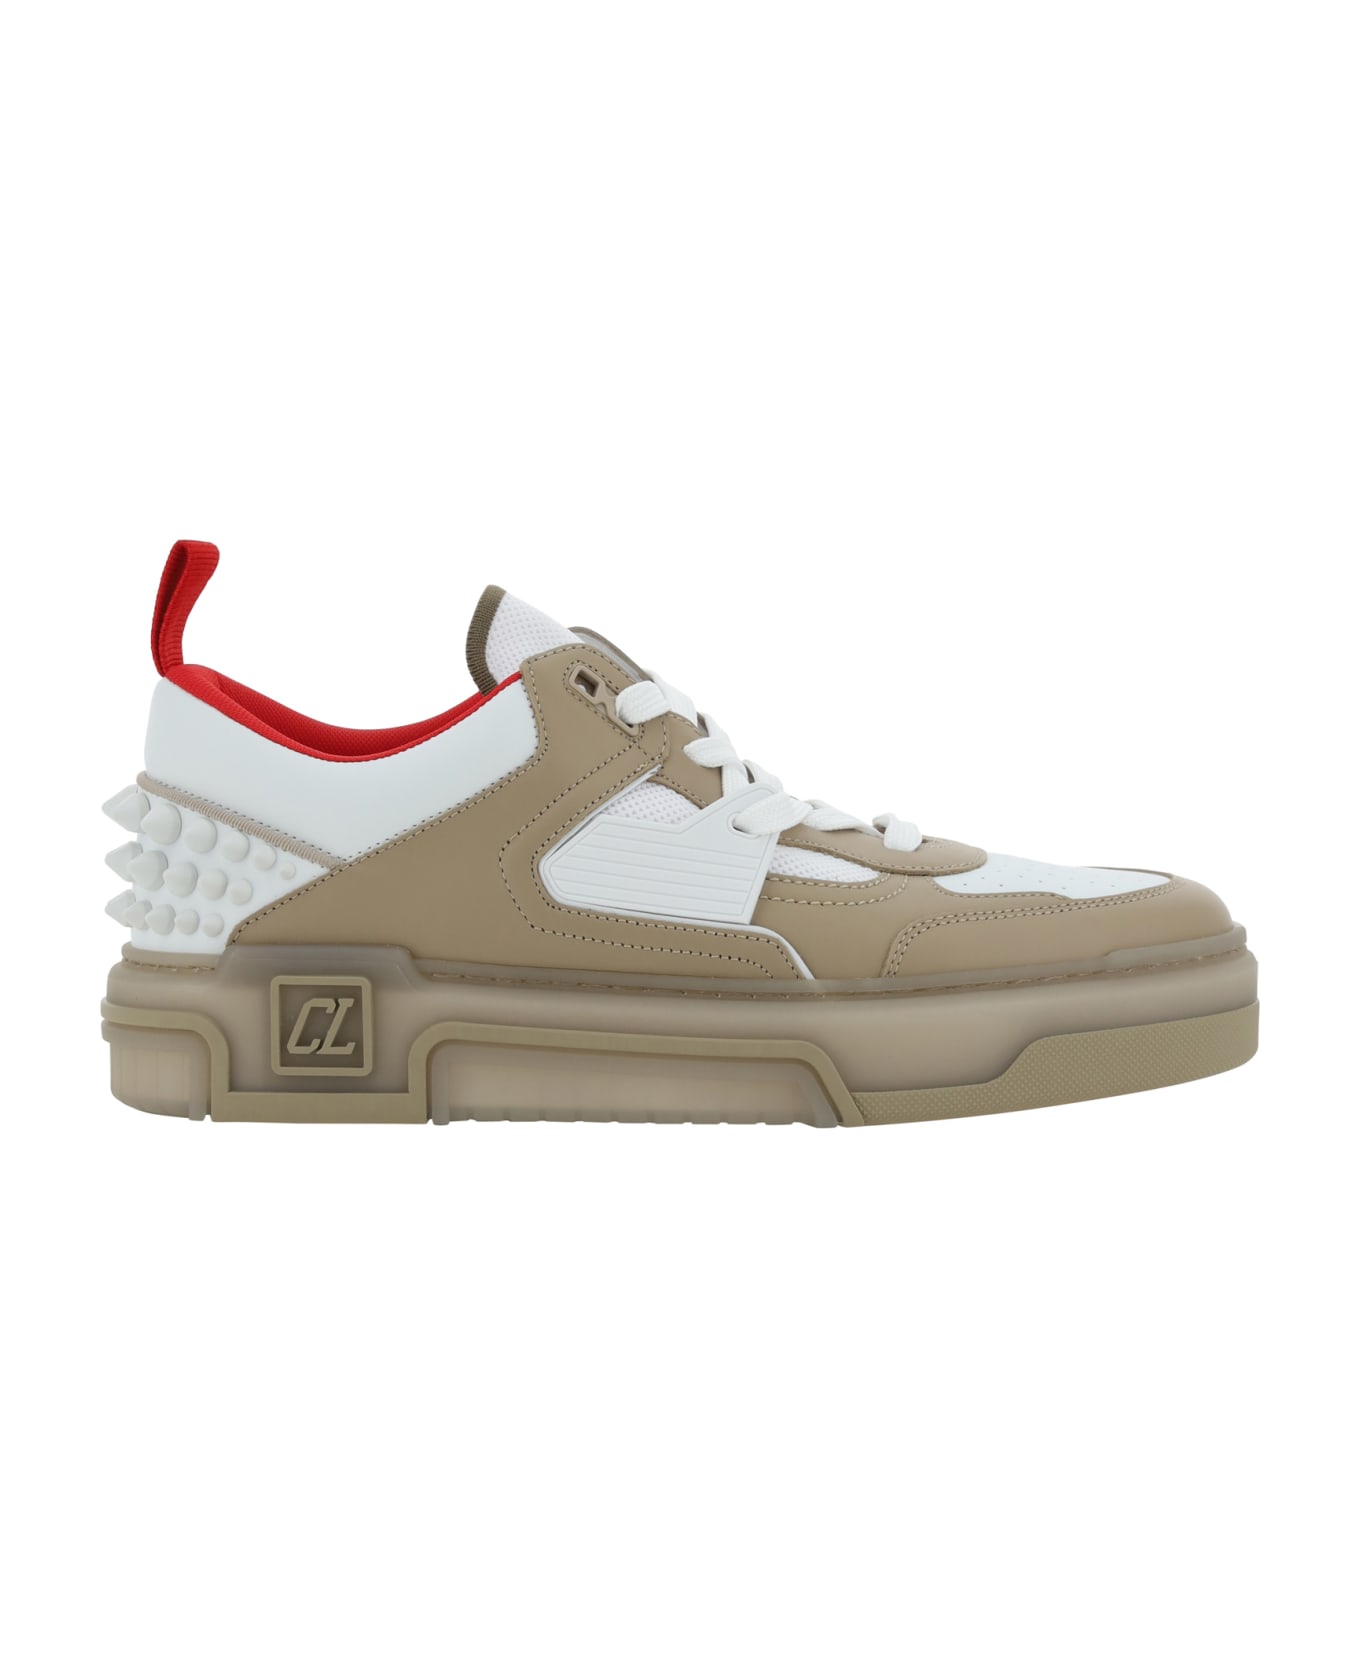 Christian Louboutin Astroloubi Sneakers - Saharienne/white